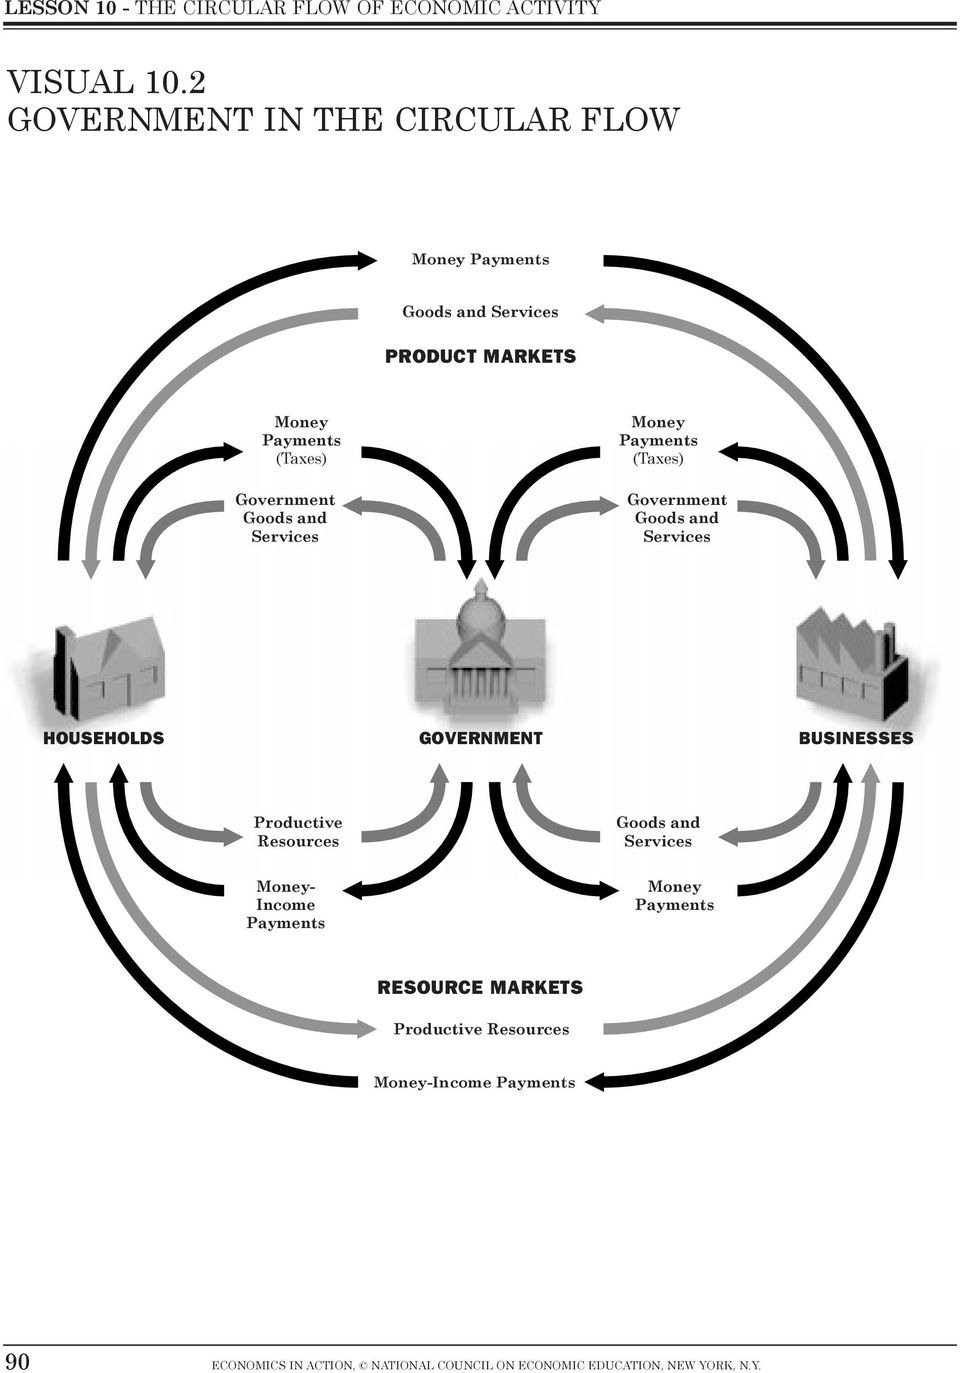 lesson-10-the-circular-flow-of-economic-activity-pdf-db-excel